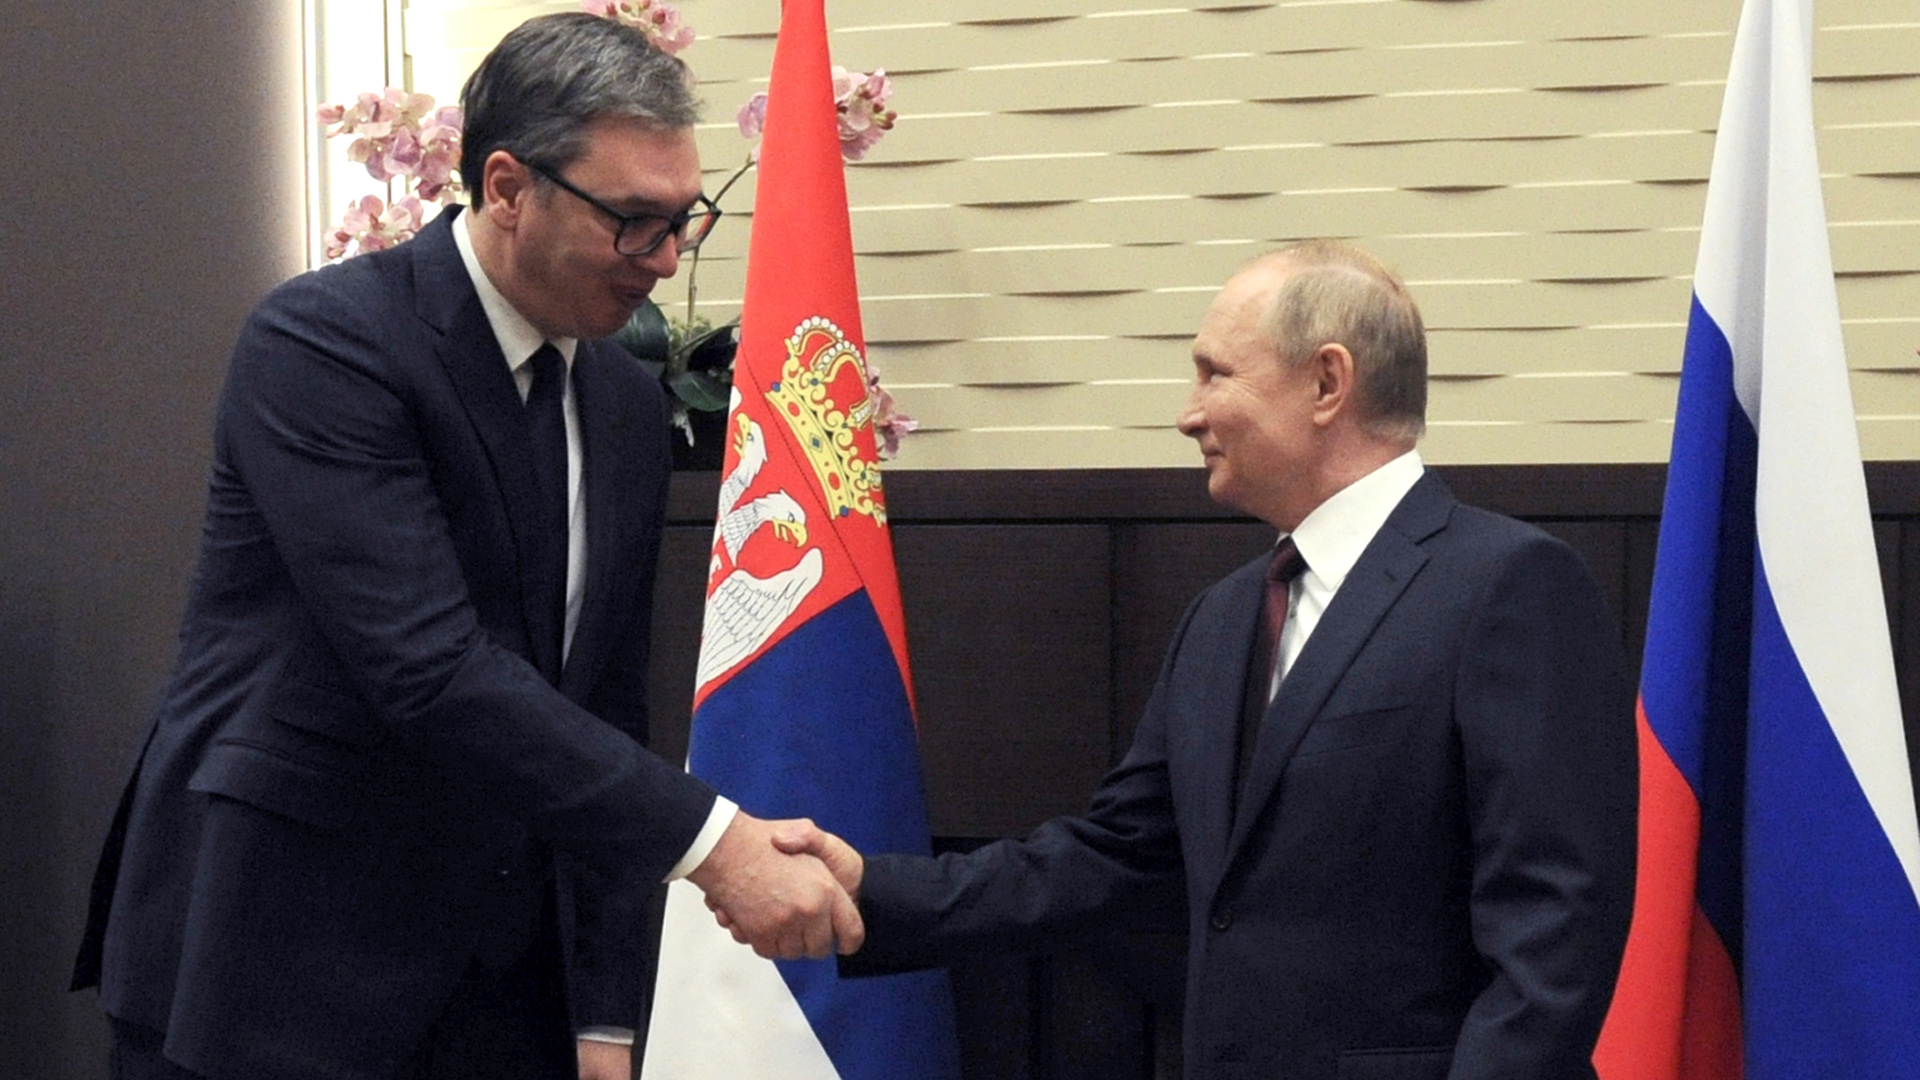 Aleksandar Vucic und Vladimir Putin | picture alliance / ASSOCIATED PR